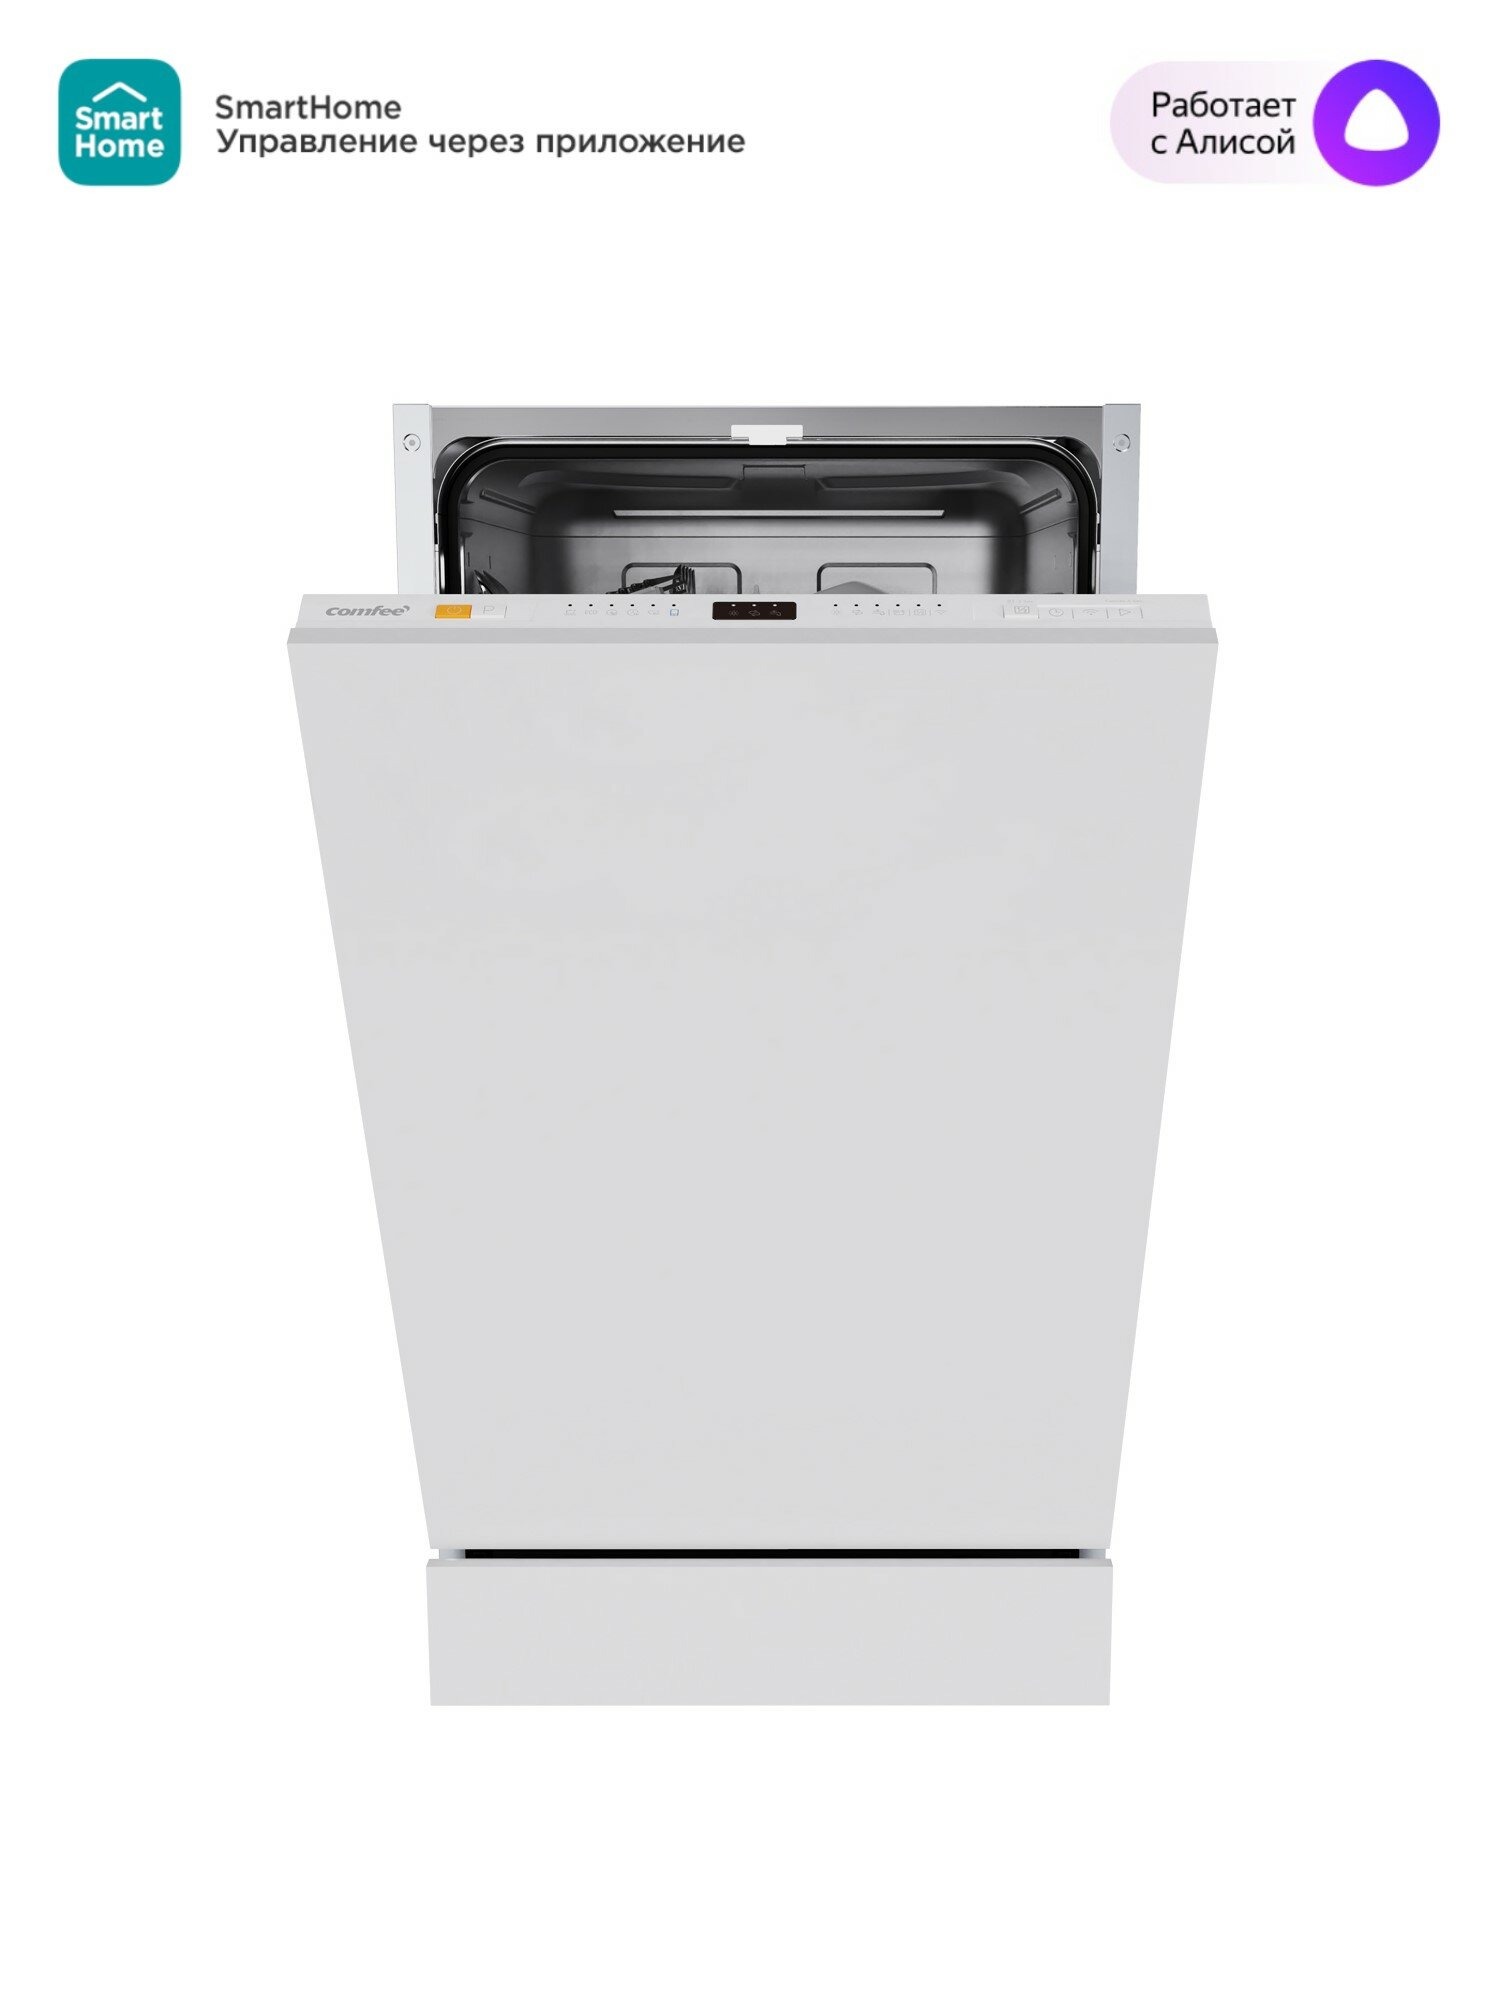 Встраиваемая посудомоечная машина с Wi-Fi Comfee CDWI452i